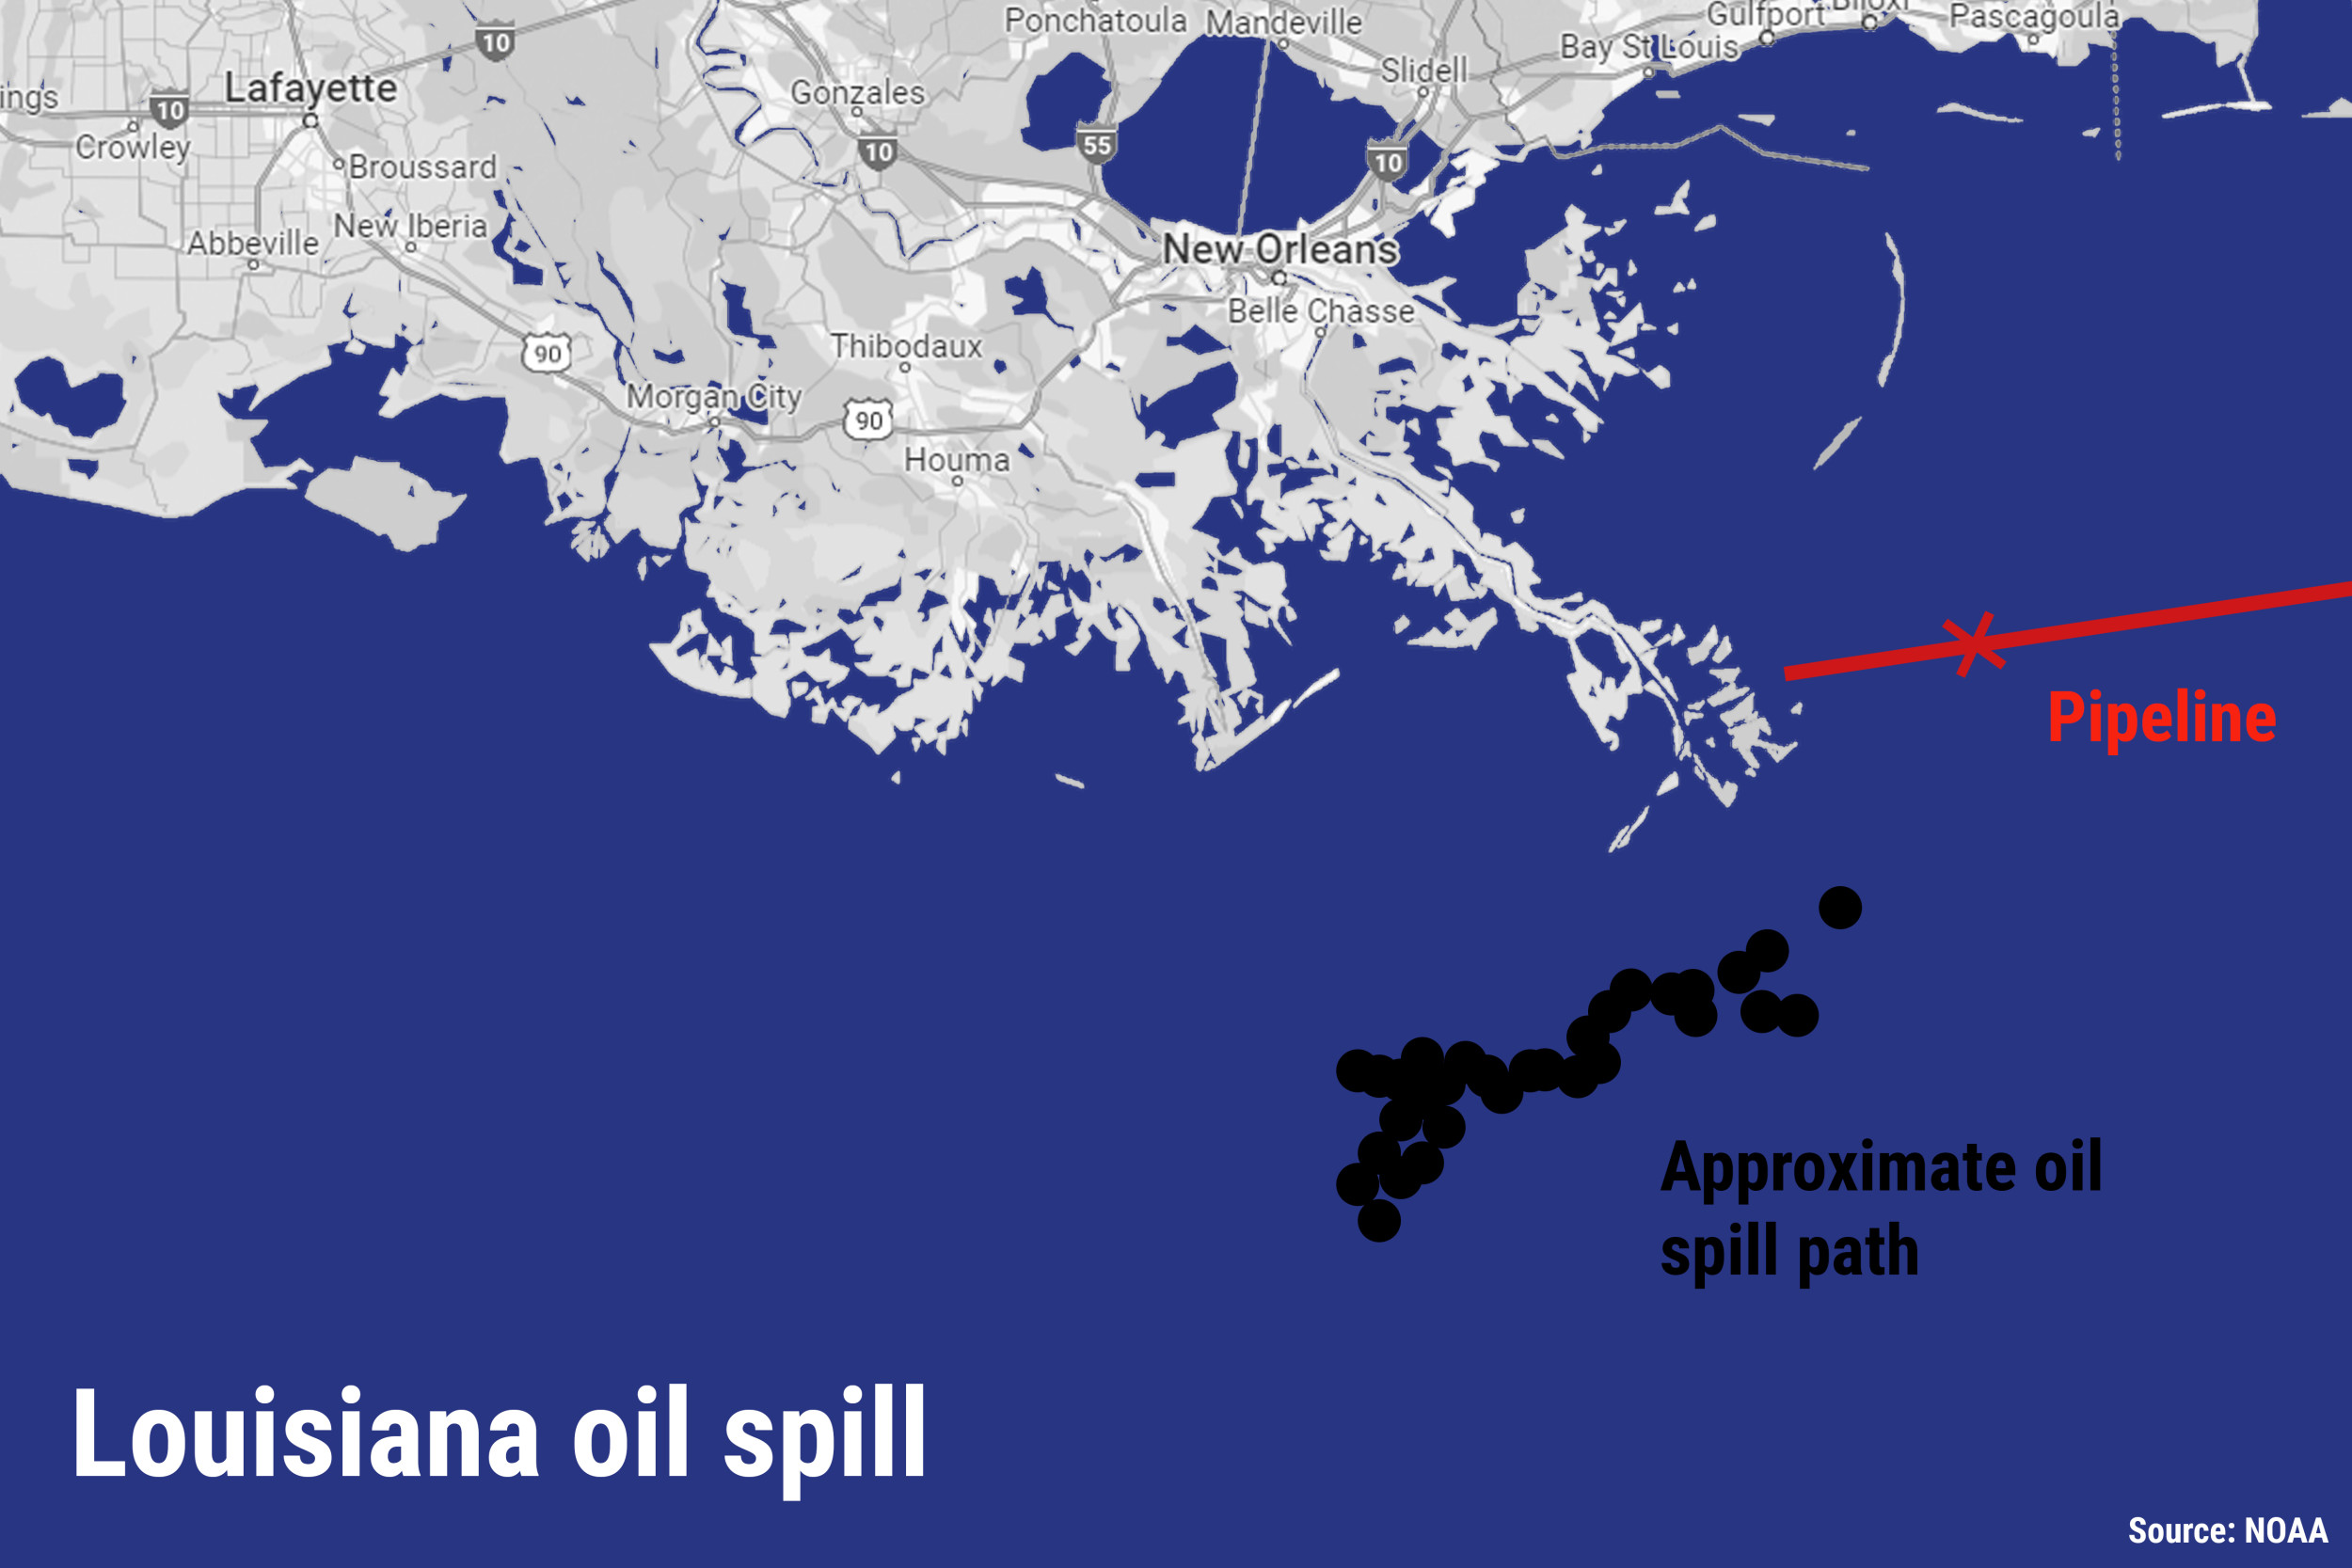 Louisiana Oil Leak Potential Impact to Animals, Coast